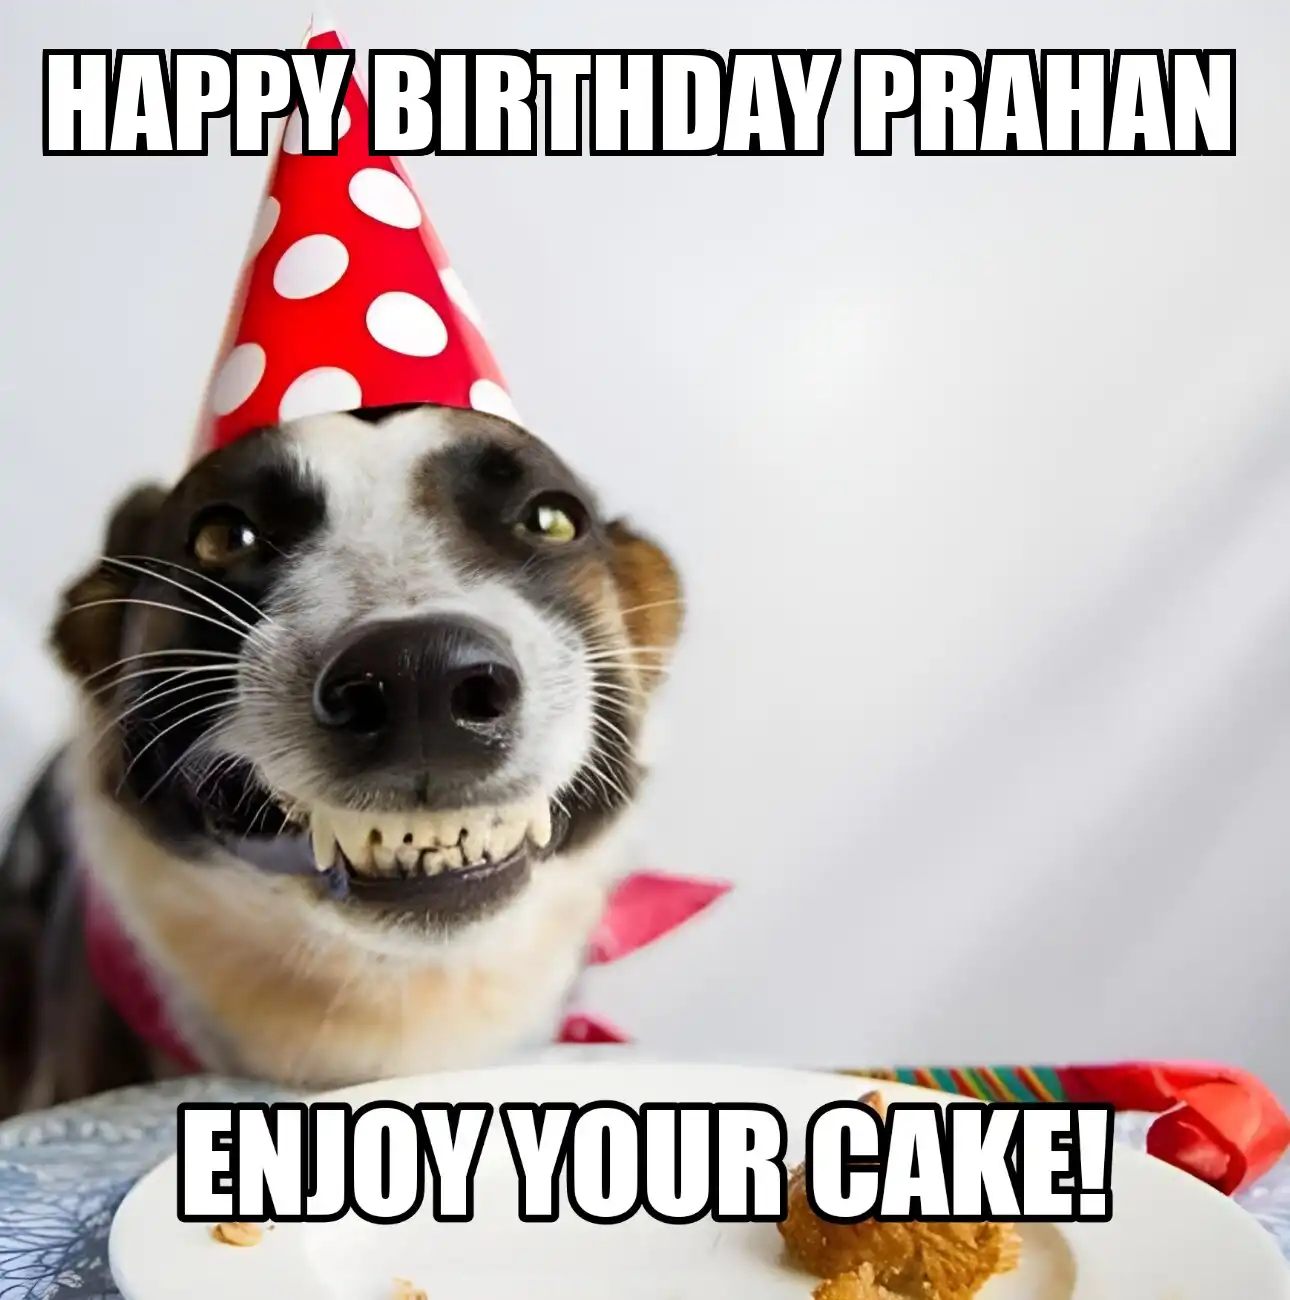 Happy Birthday Prahan Enjoy Your Cake Dog Meme